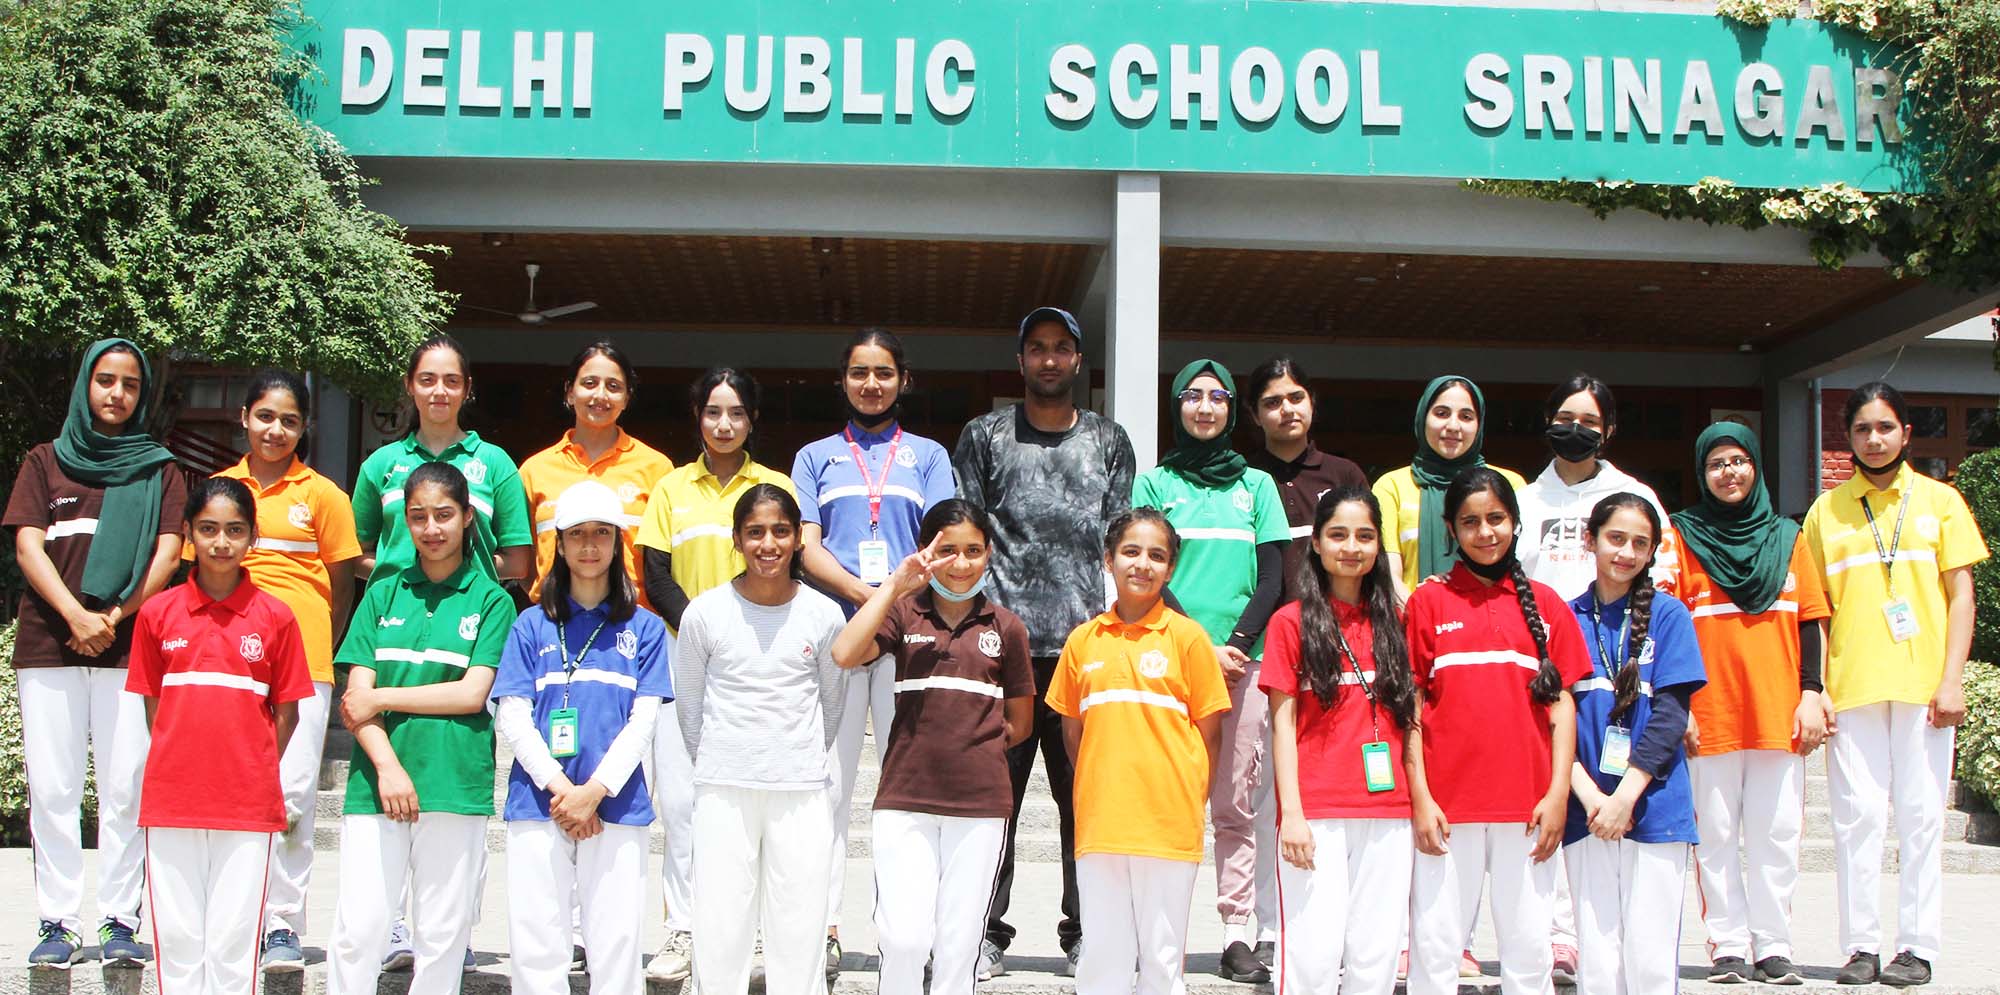 DPS Srinagar bagged a rich haul of 12 medals at the recently held Inter-School Athletics Meet